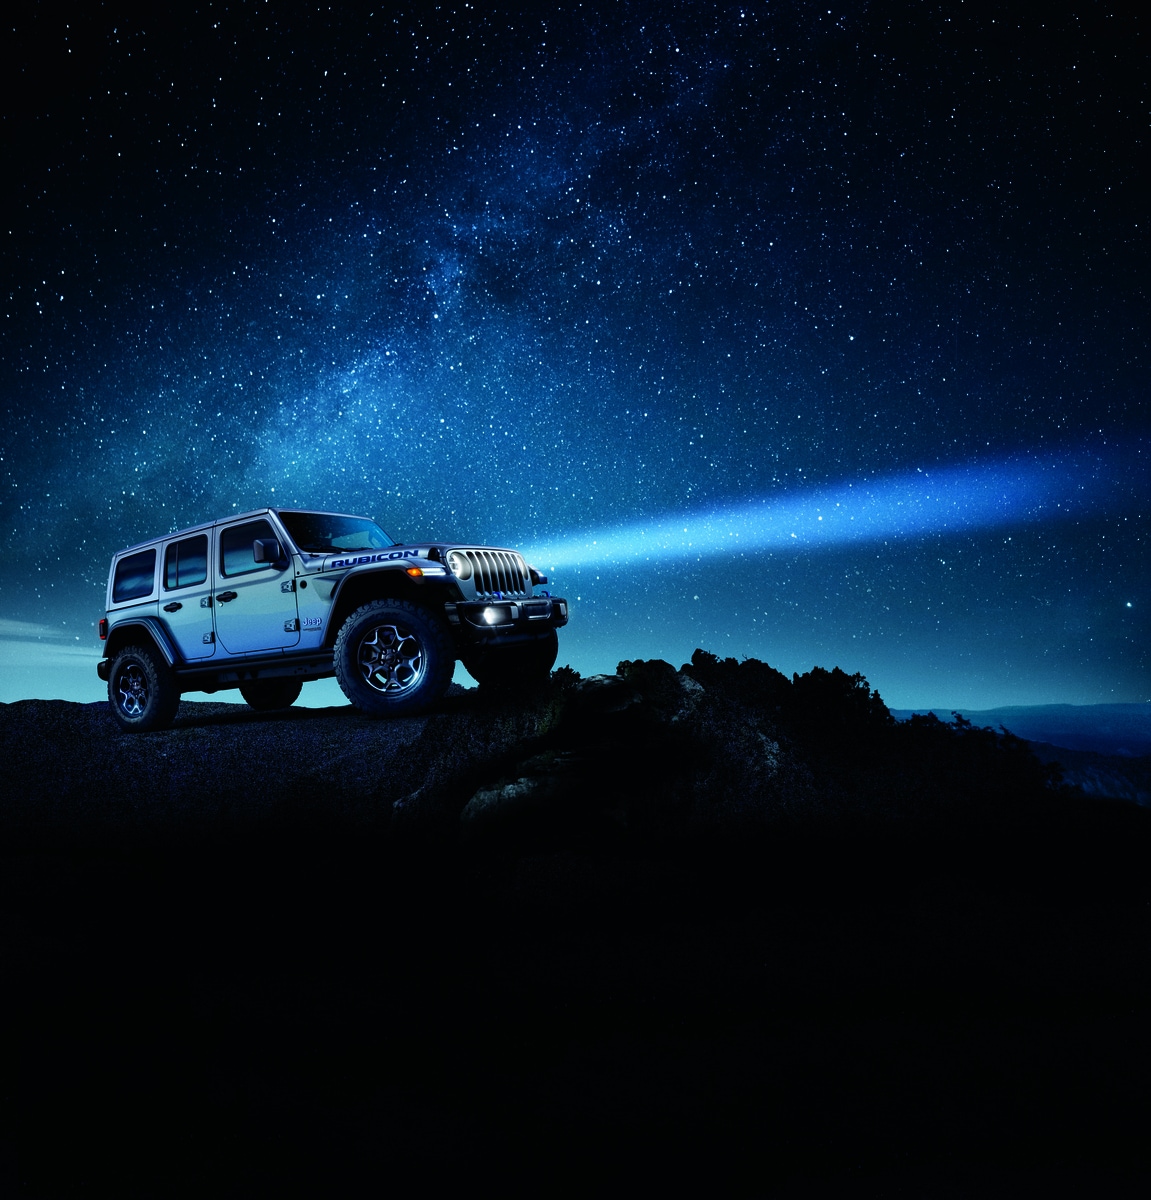 silver Jeep Wrangler SUV parked under a starry night sky